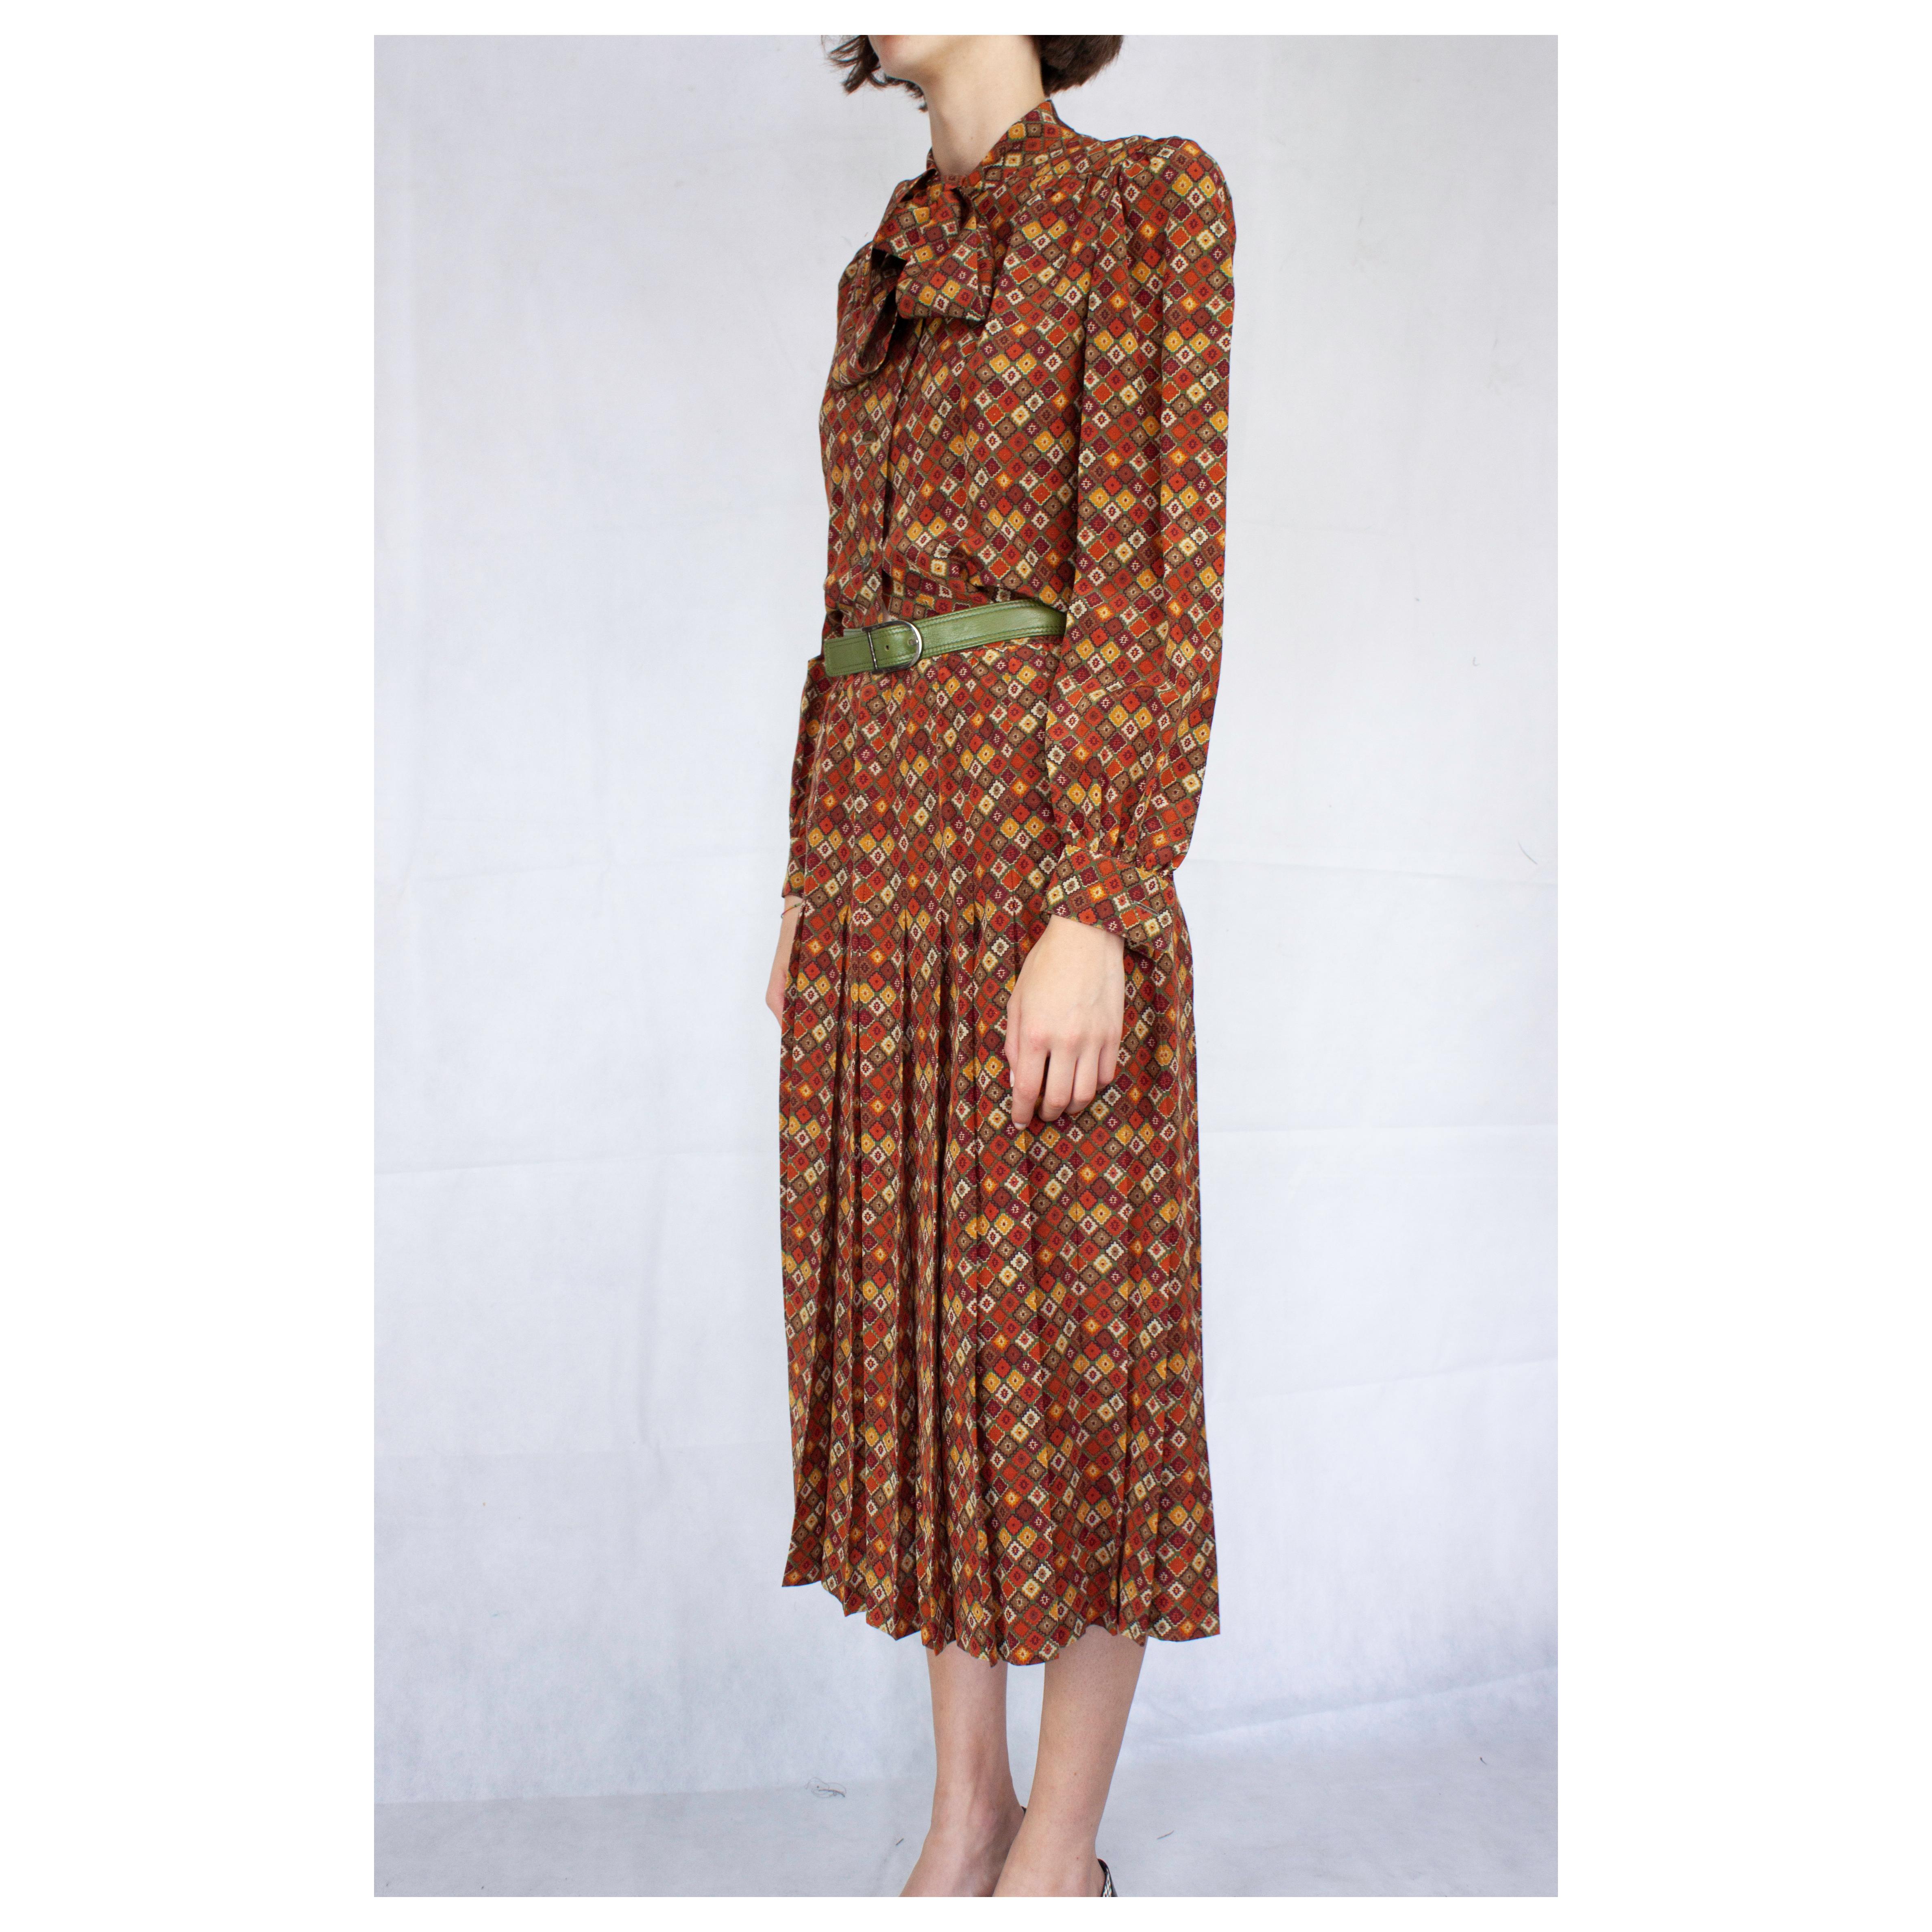 Brown Givenchy printed skirt ensemble. circa 1970s